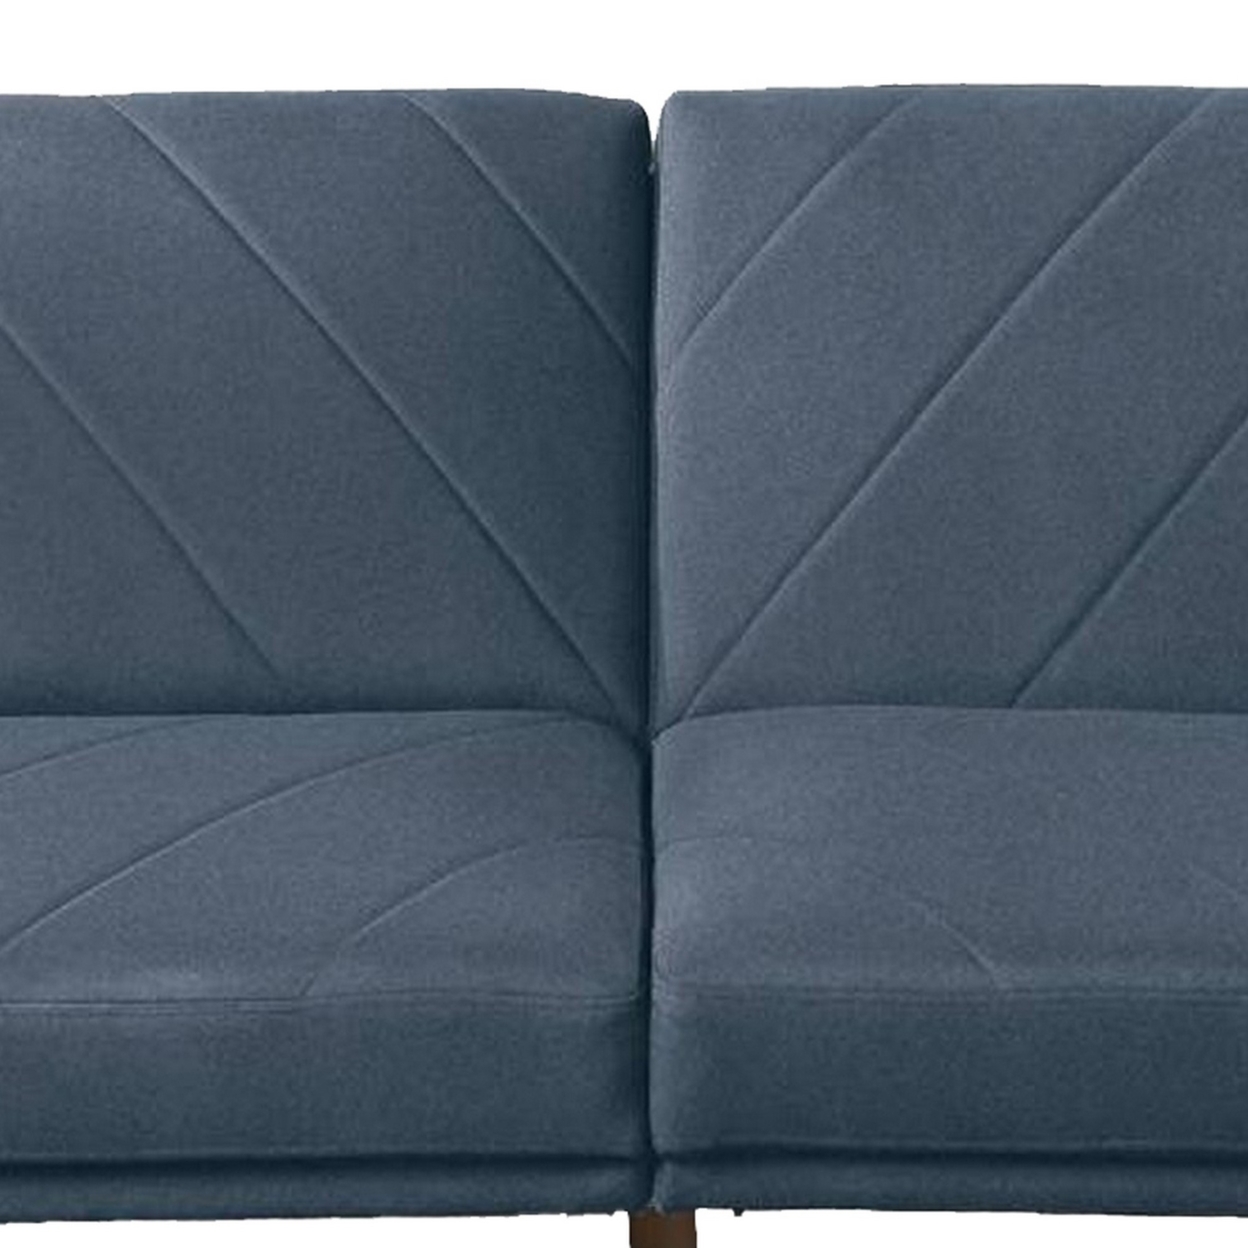 Fabric Adjustable Sofa With Chevron Pattern And Splayed Legs, Navy Blue- Saltoro Sherpi